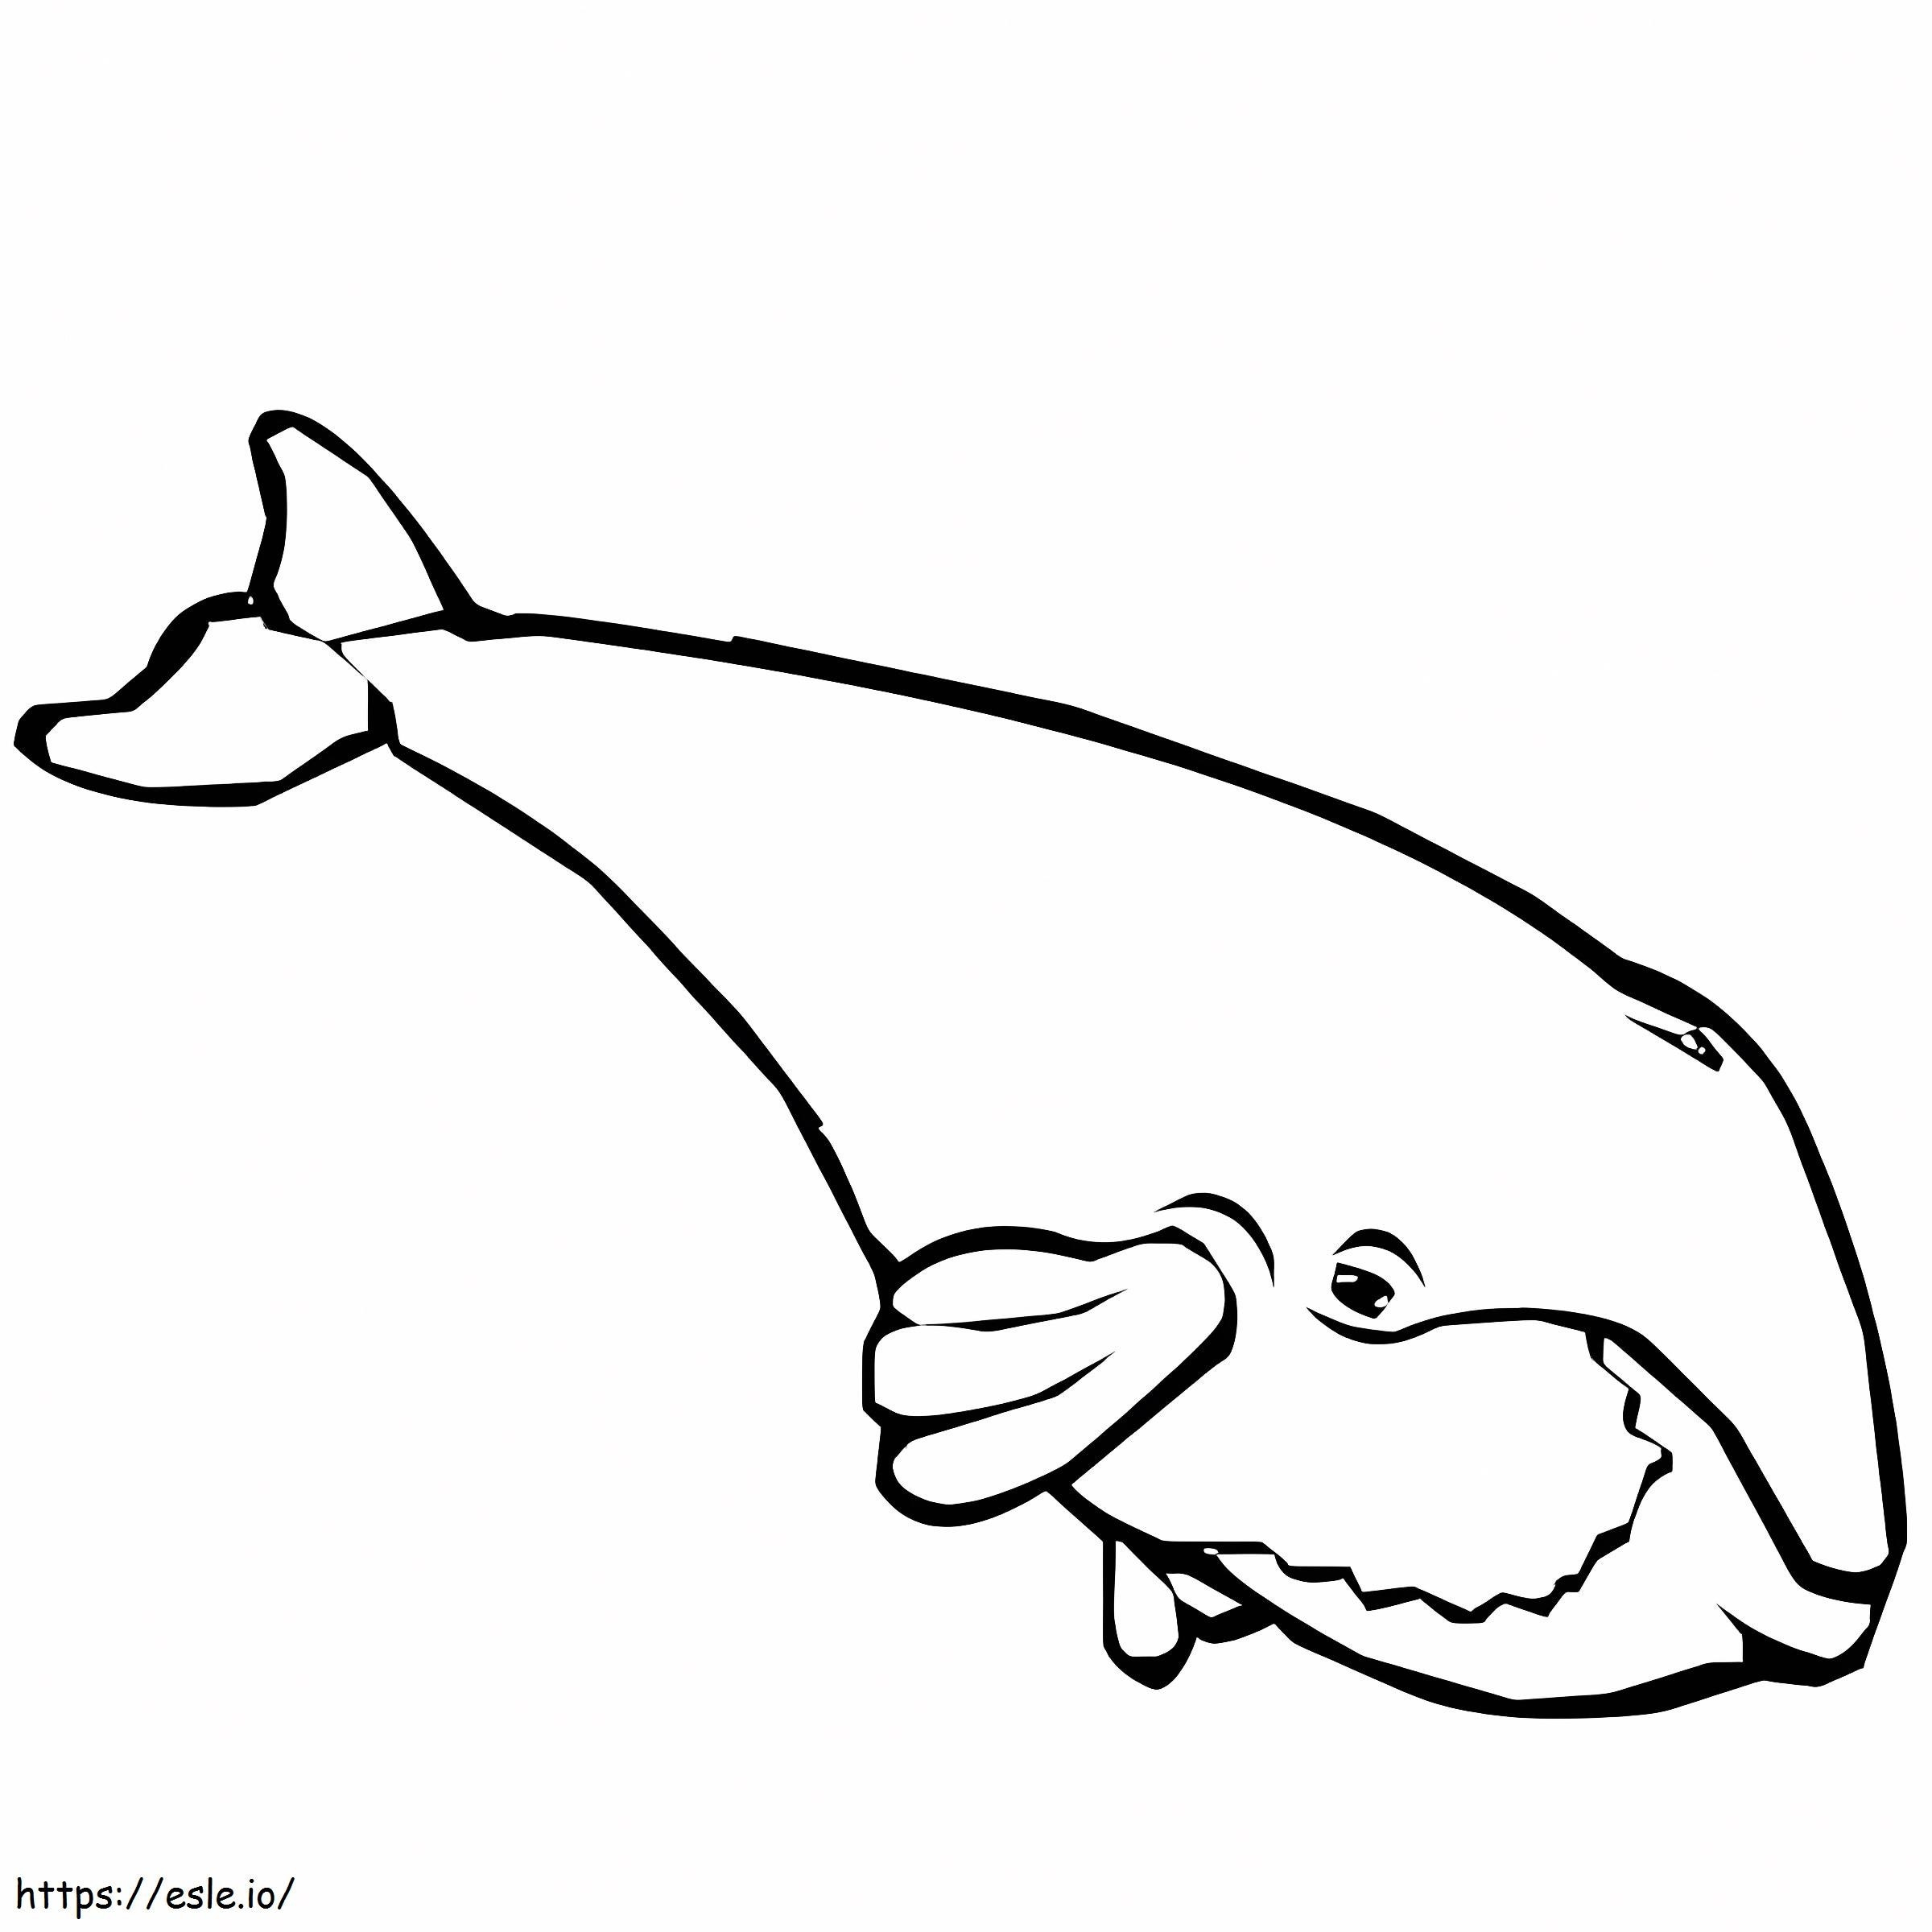 Eenvoudige tekenwalvis kleurplaat kleurplaat